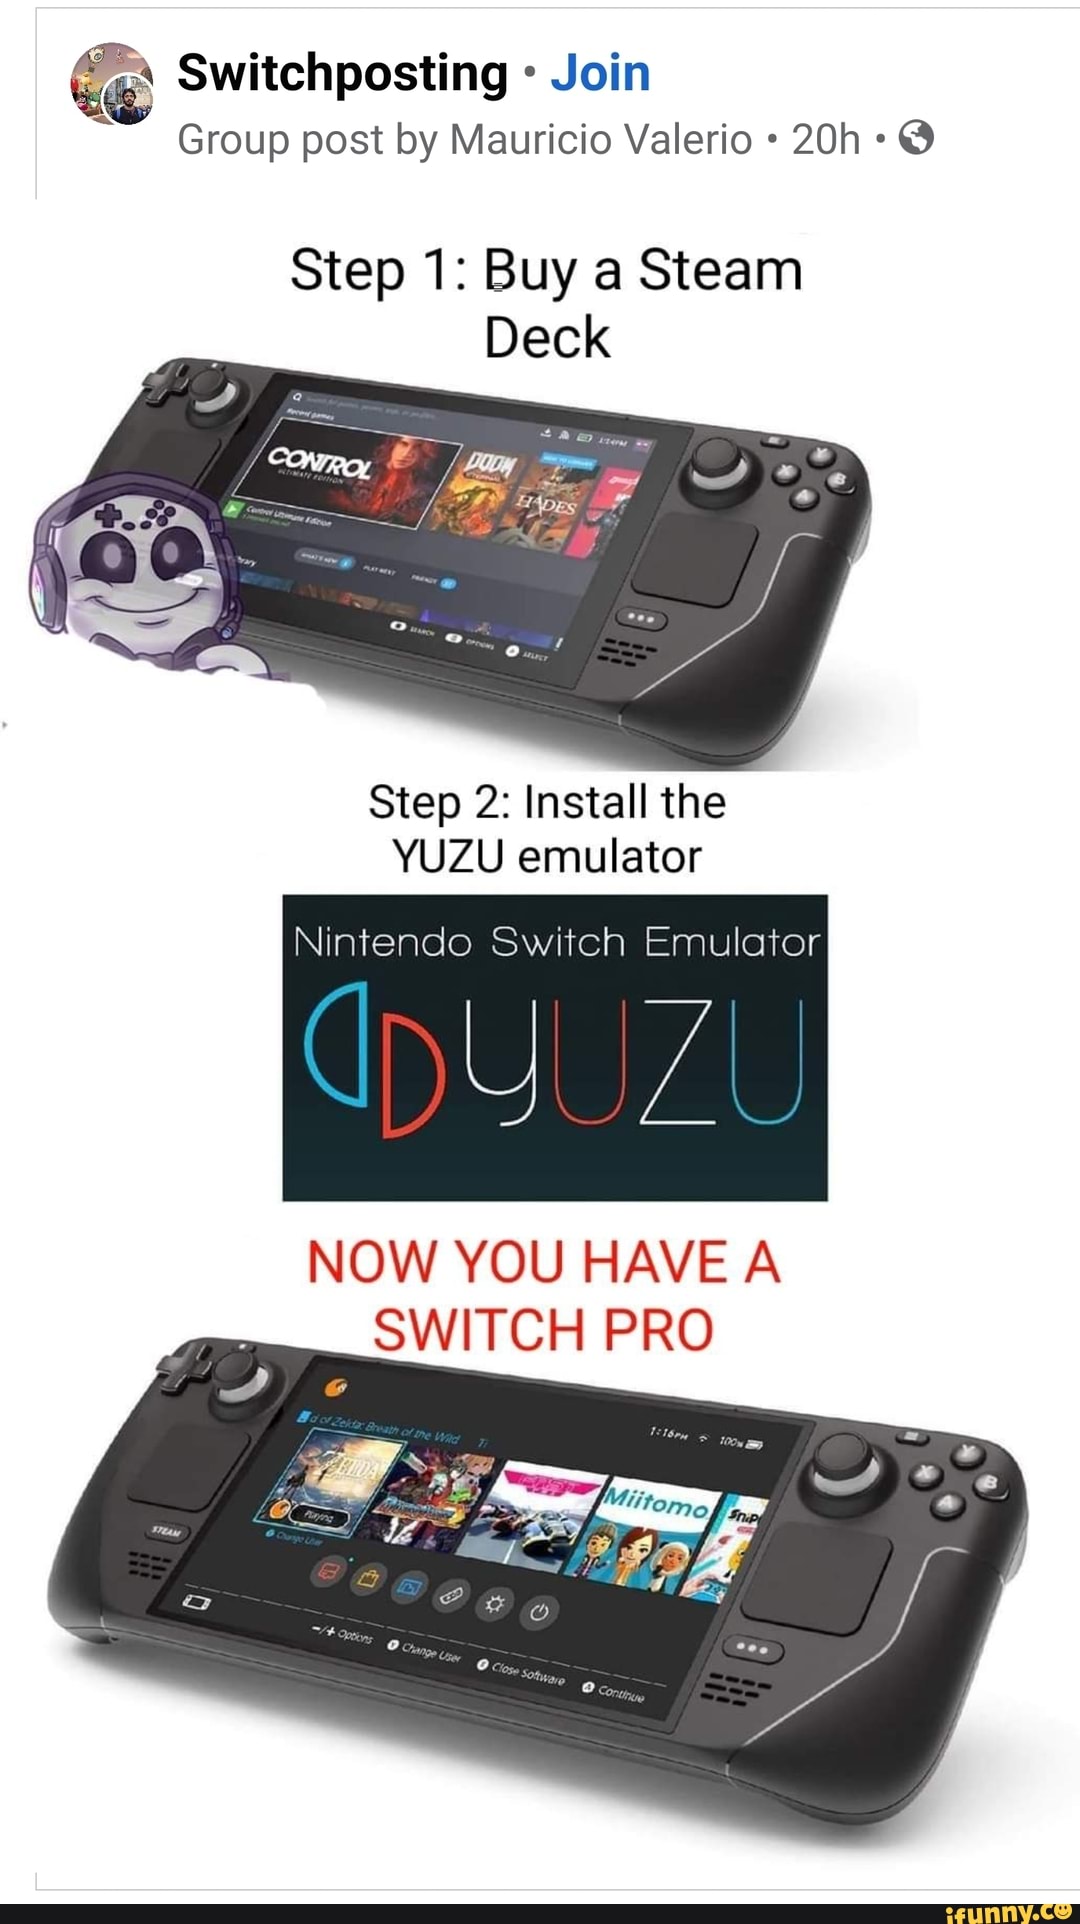 Installing Yuzu Emulator On Steam Deck (The Easy Way)